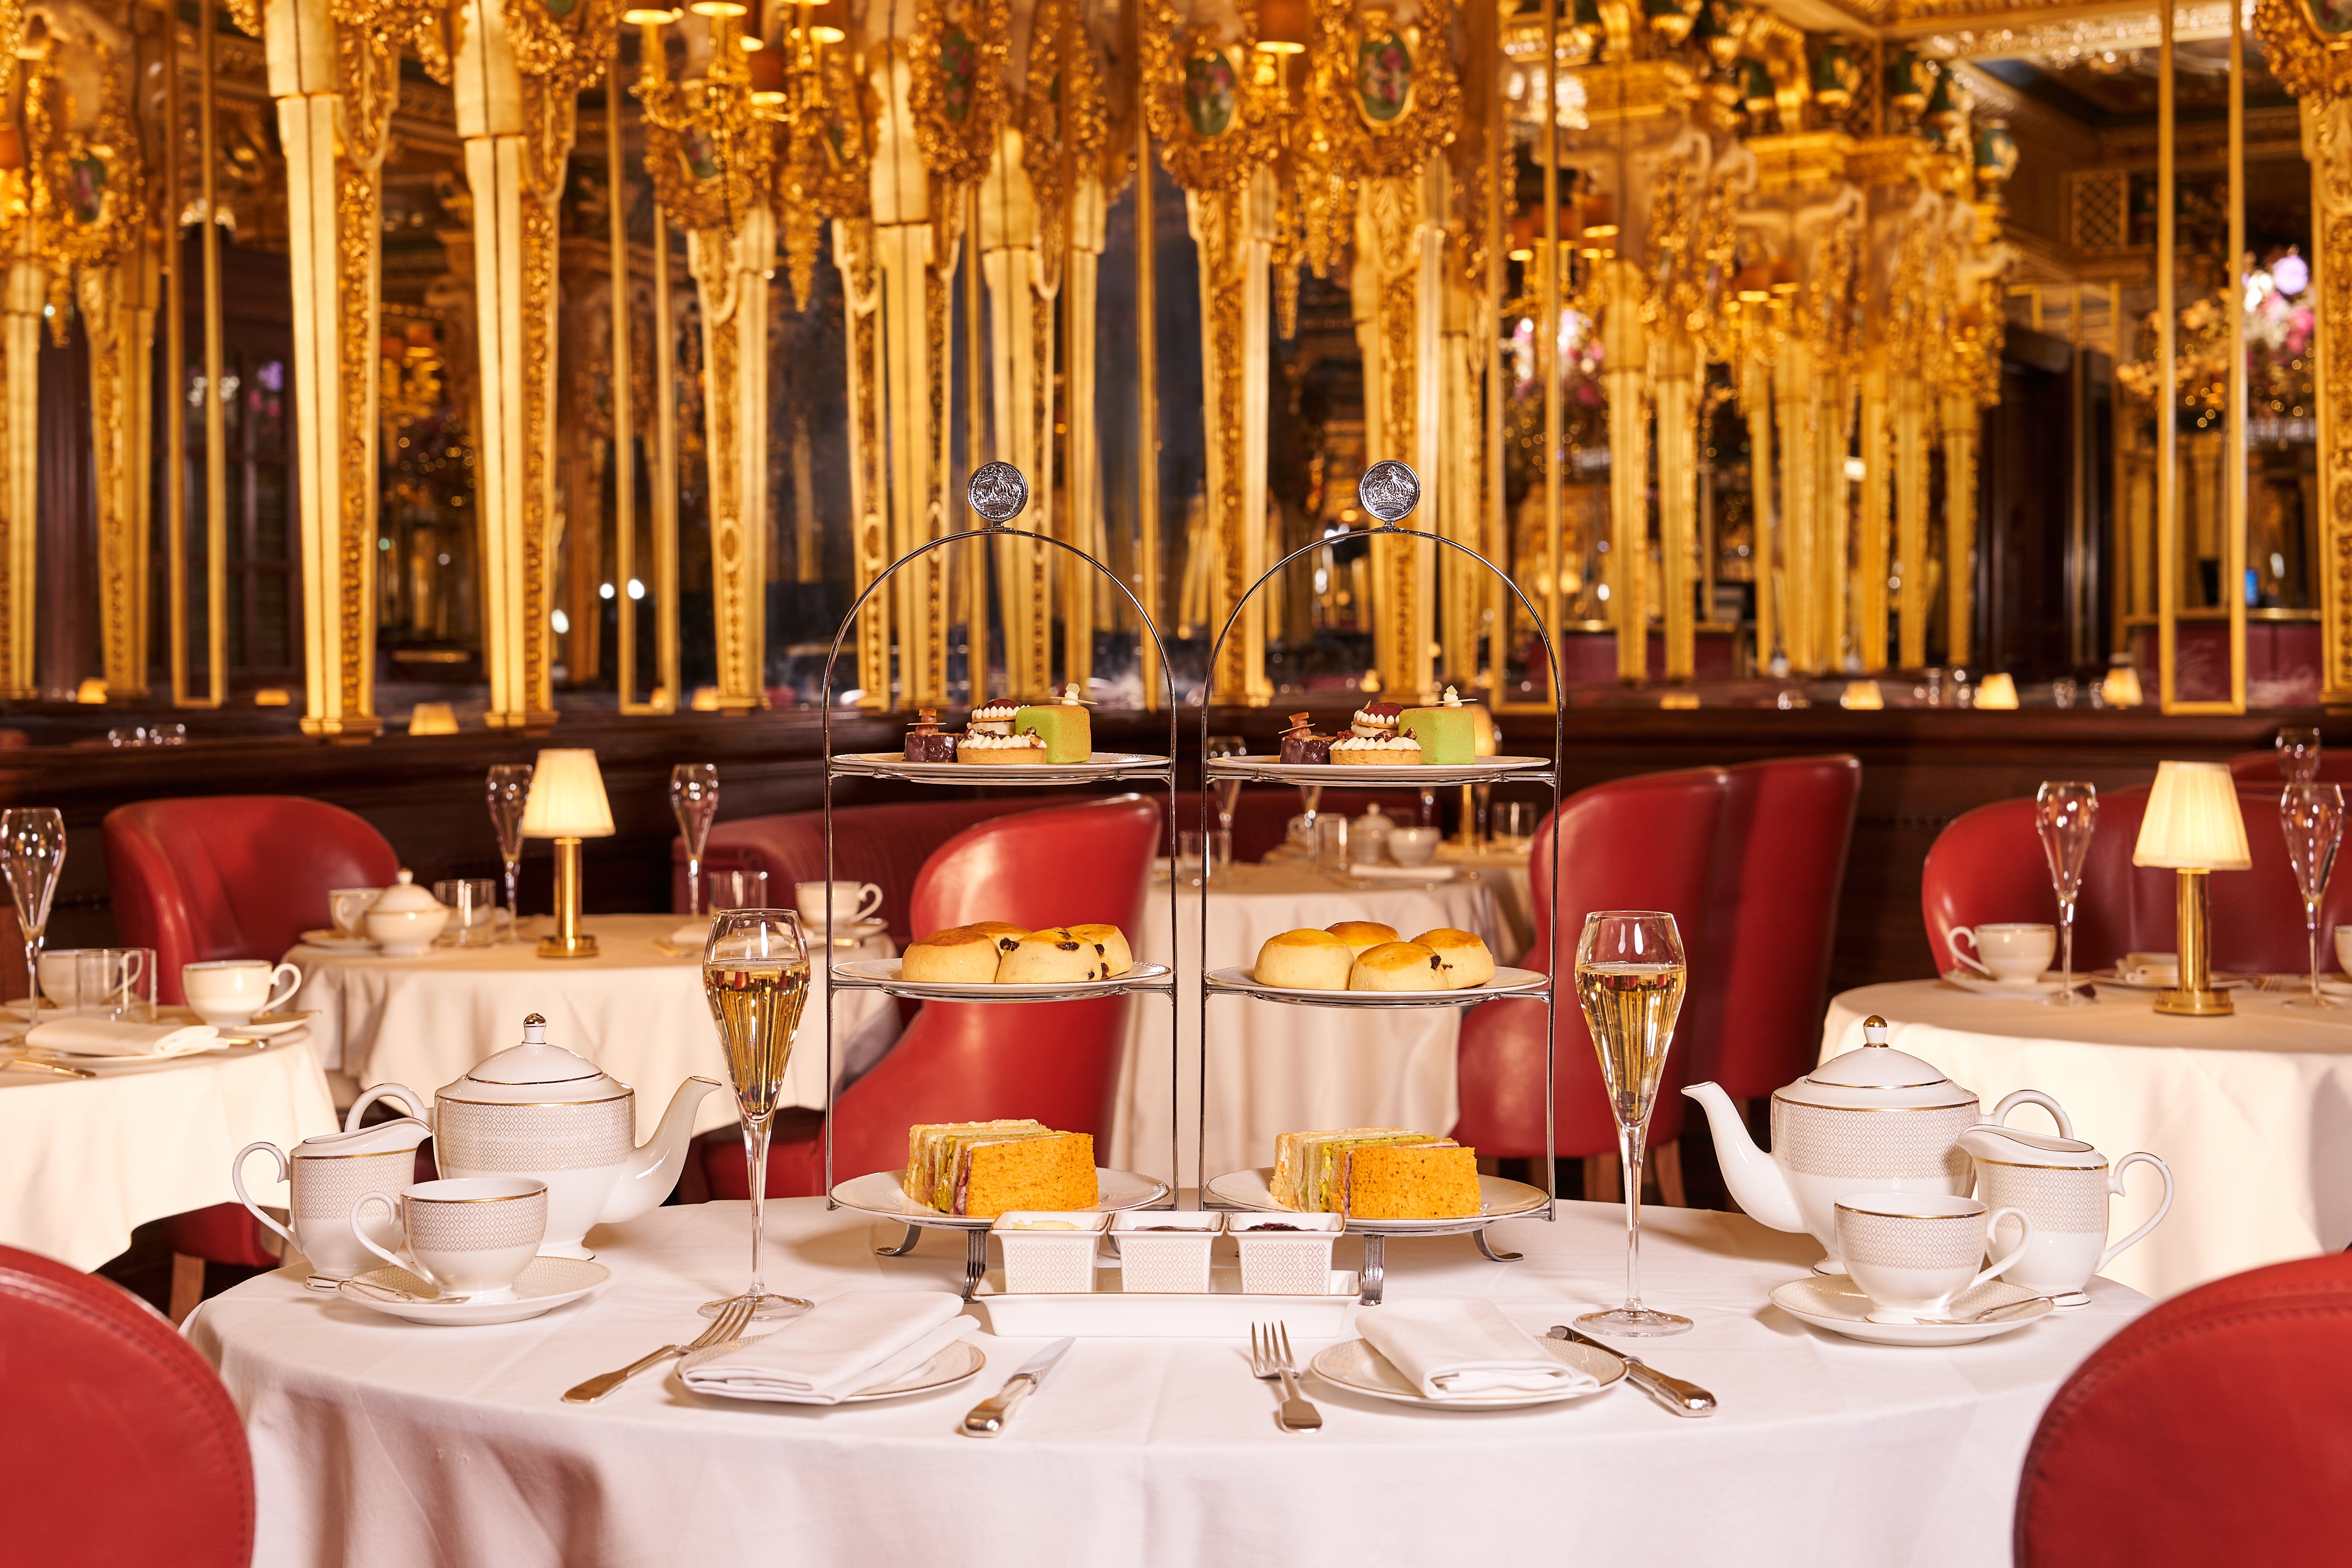 The Café Royal’s golden Grill Room